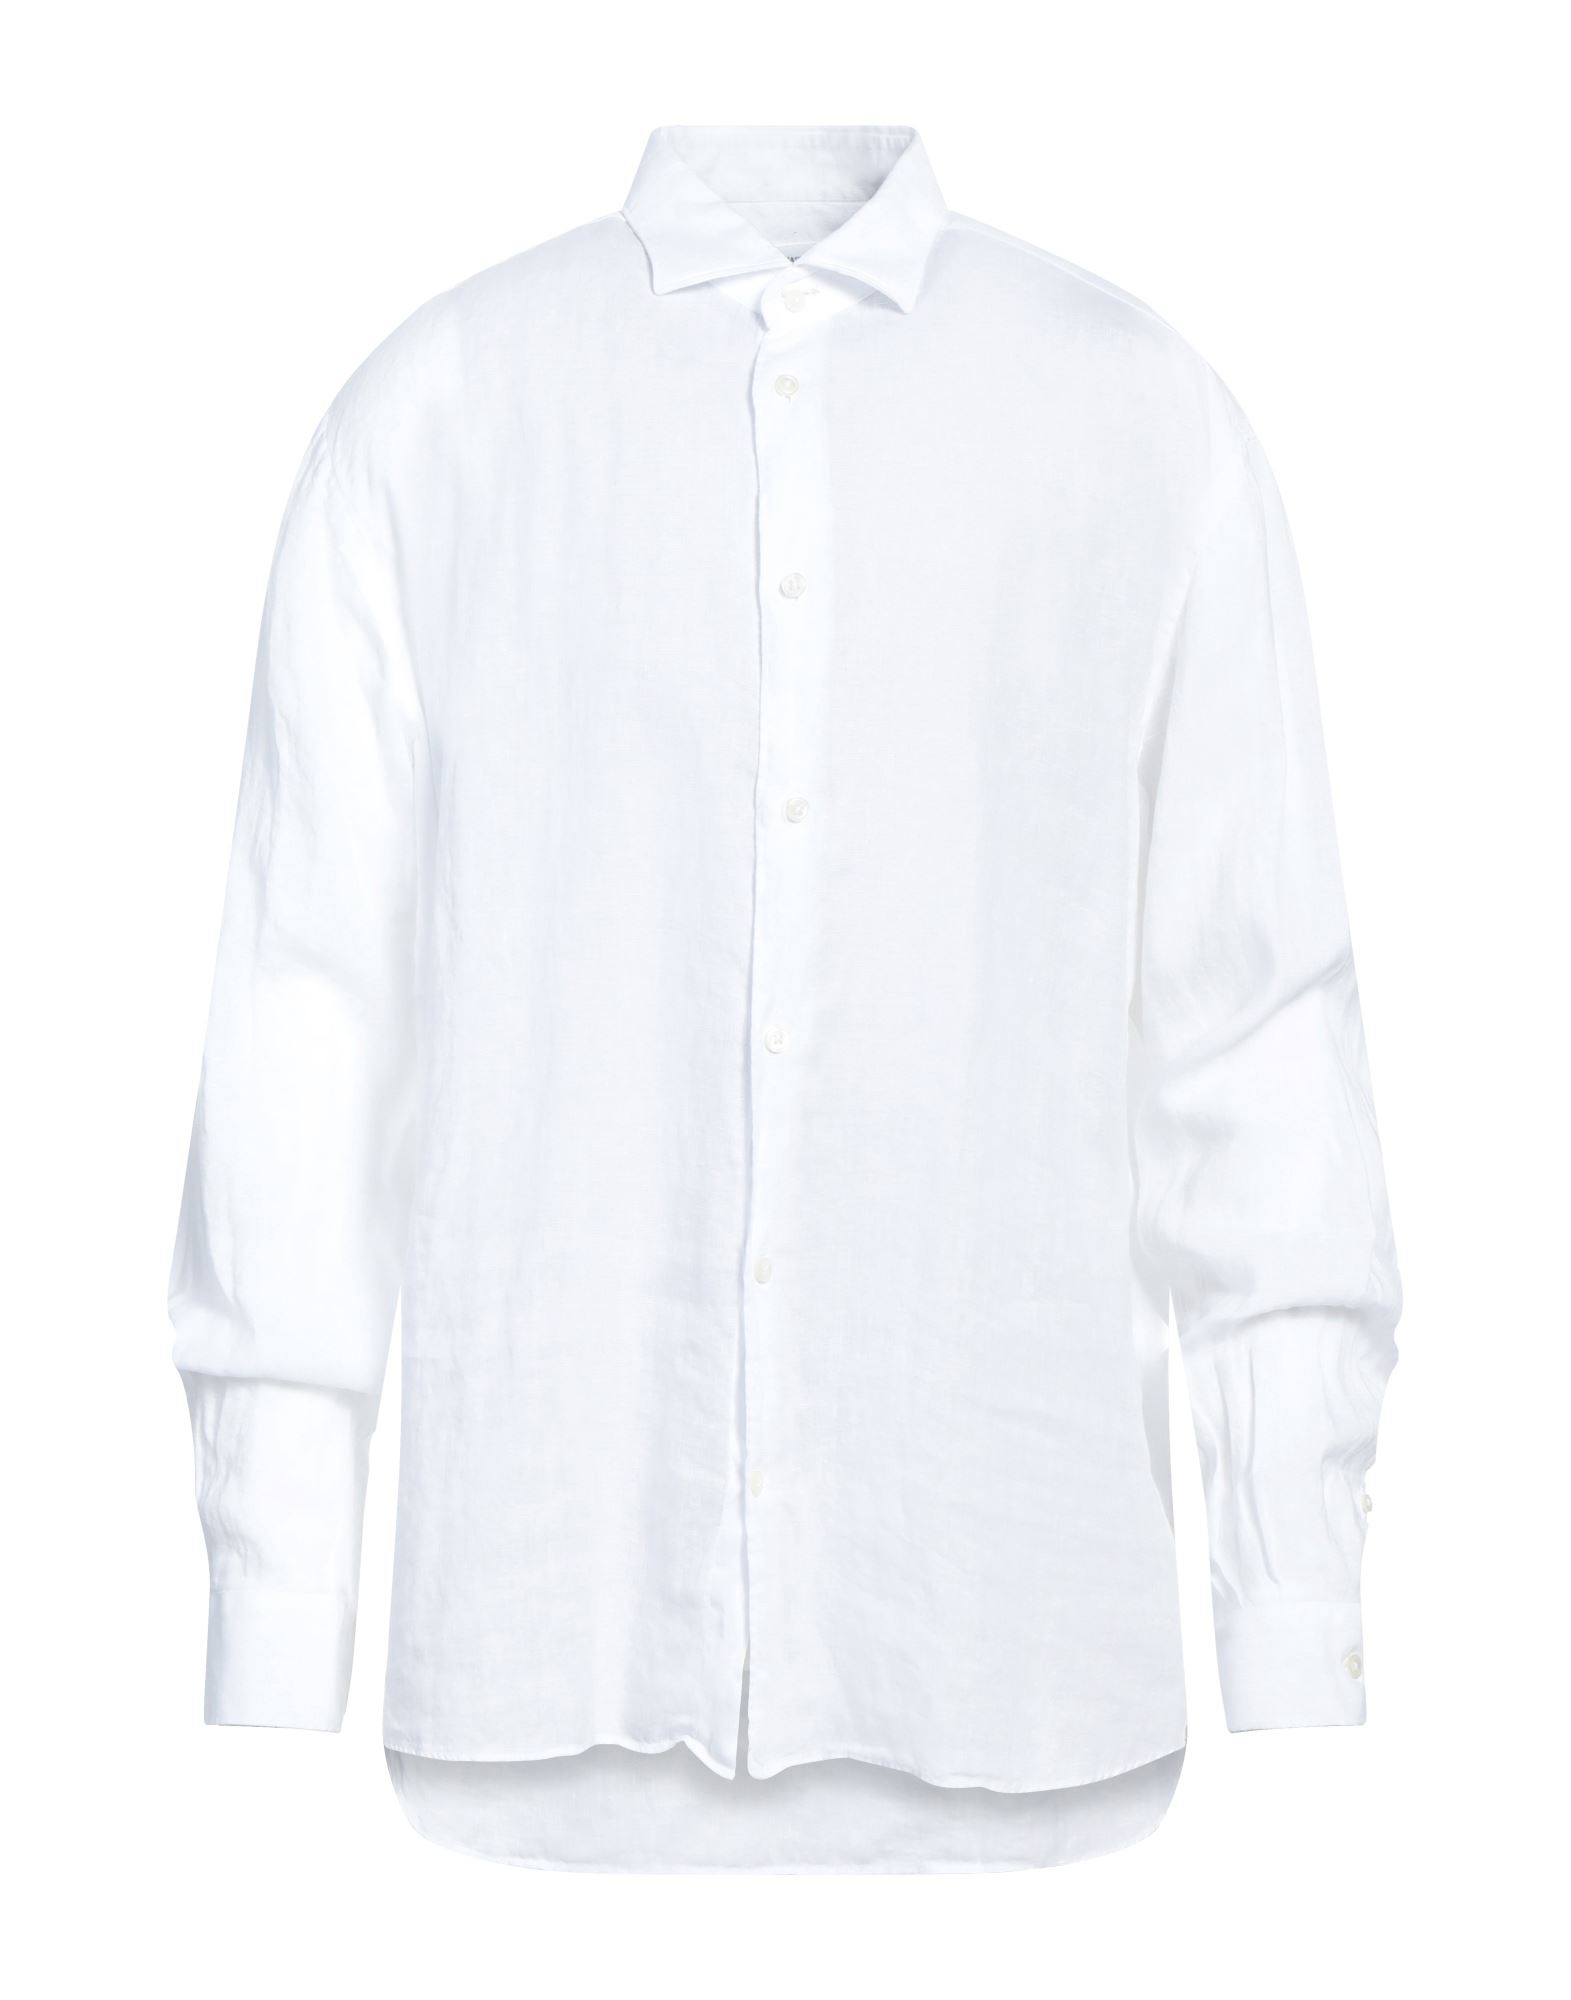 Mastricamiciai Shirts In White